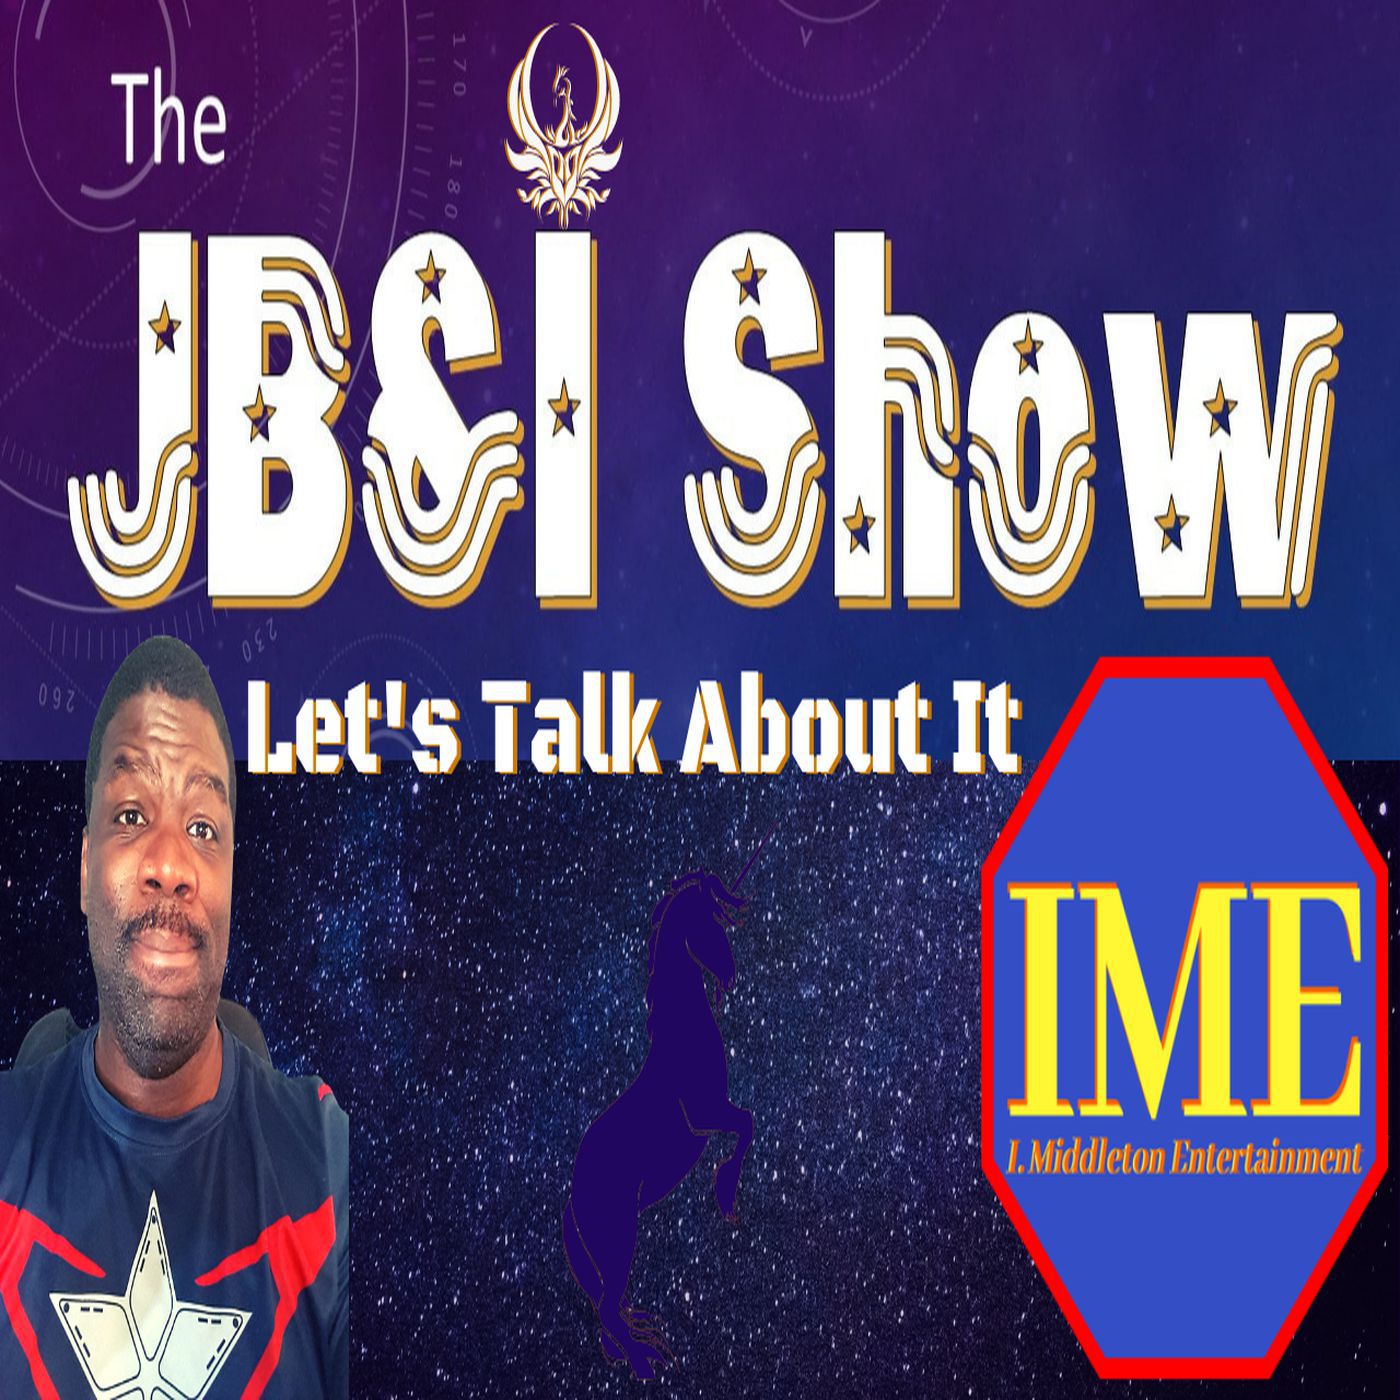 The JB&I Show Podcast podcast show image